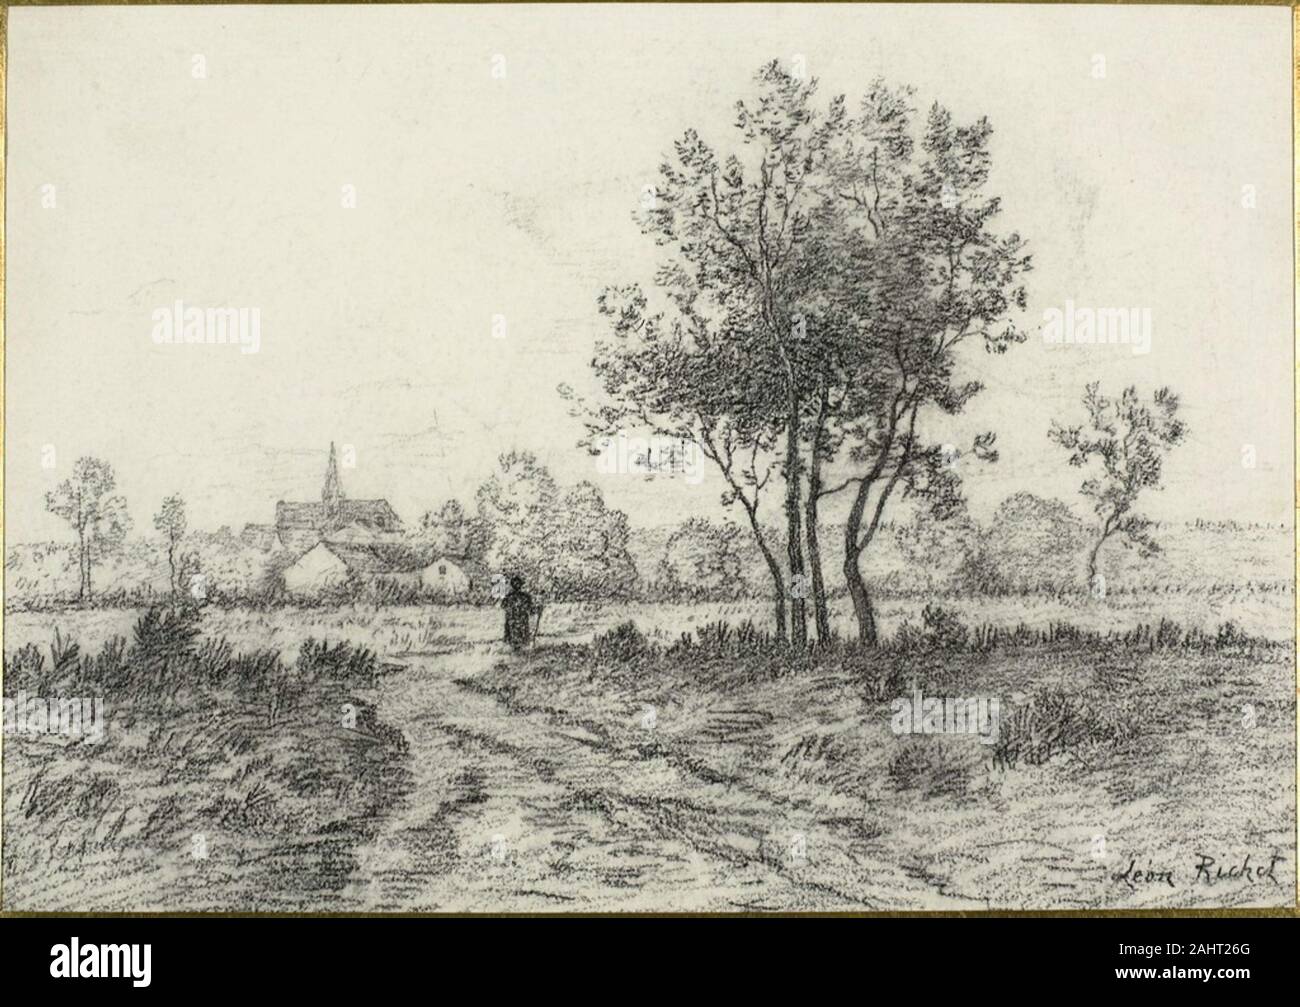 Léon Richet. Landscape. 1870–1880. France. Charcoal on ivory wove paper Stock Photo